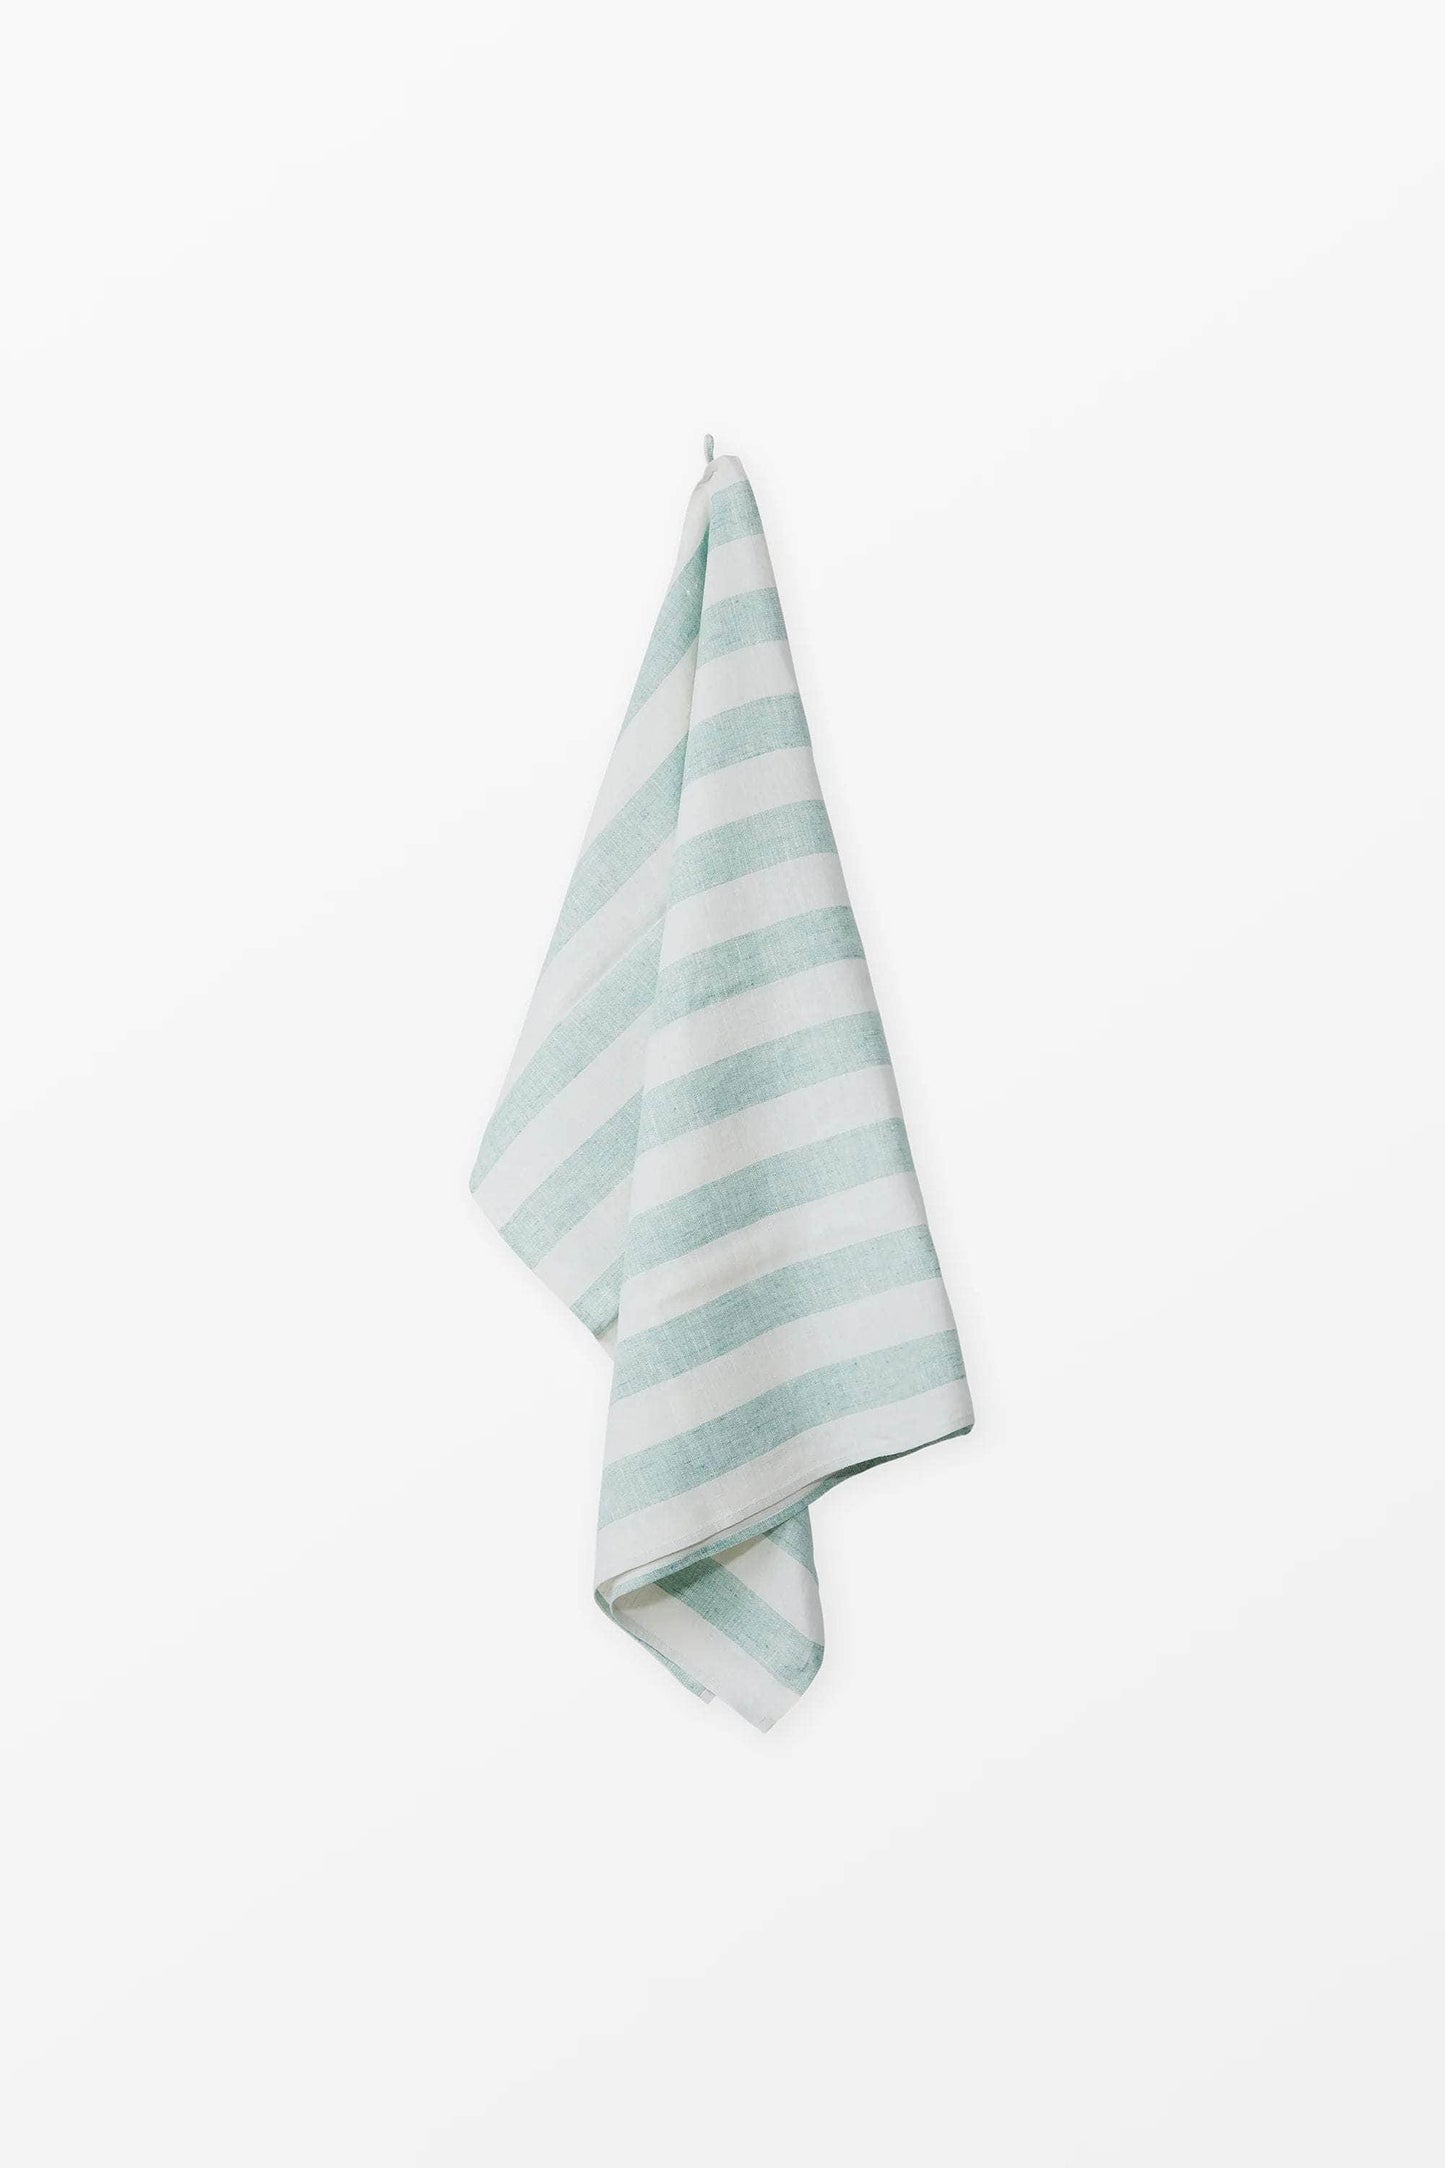 Turquoise + White Linen Bath Towel